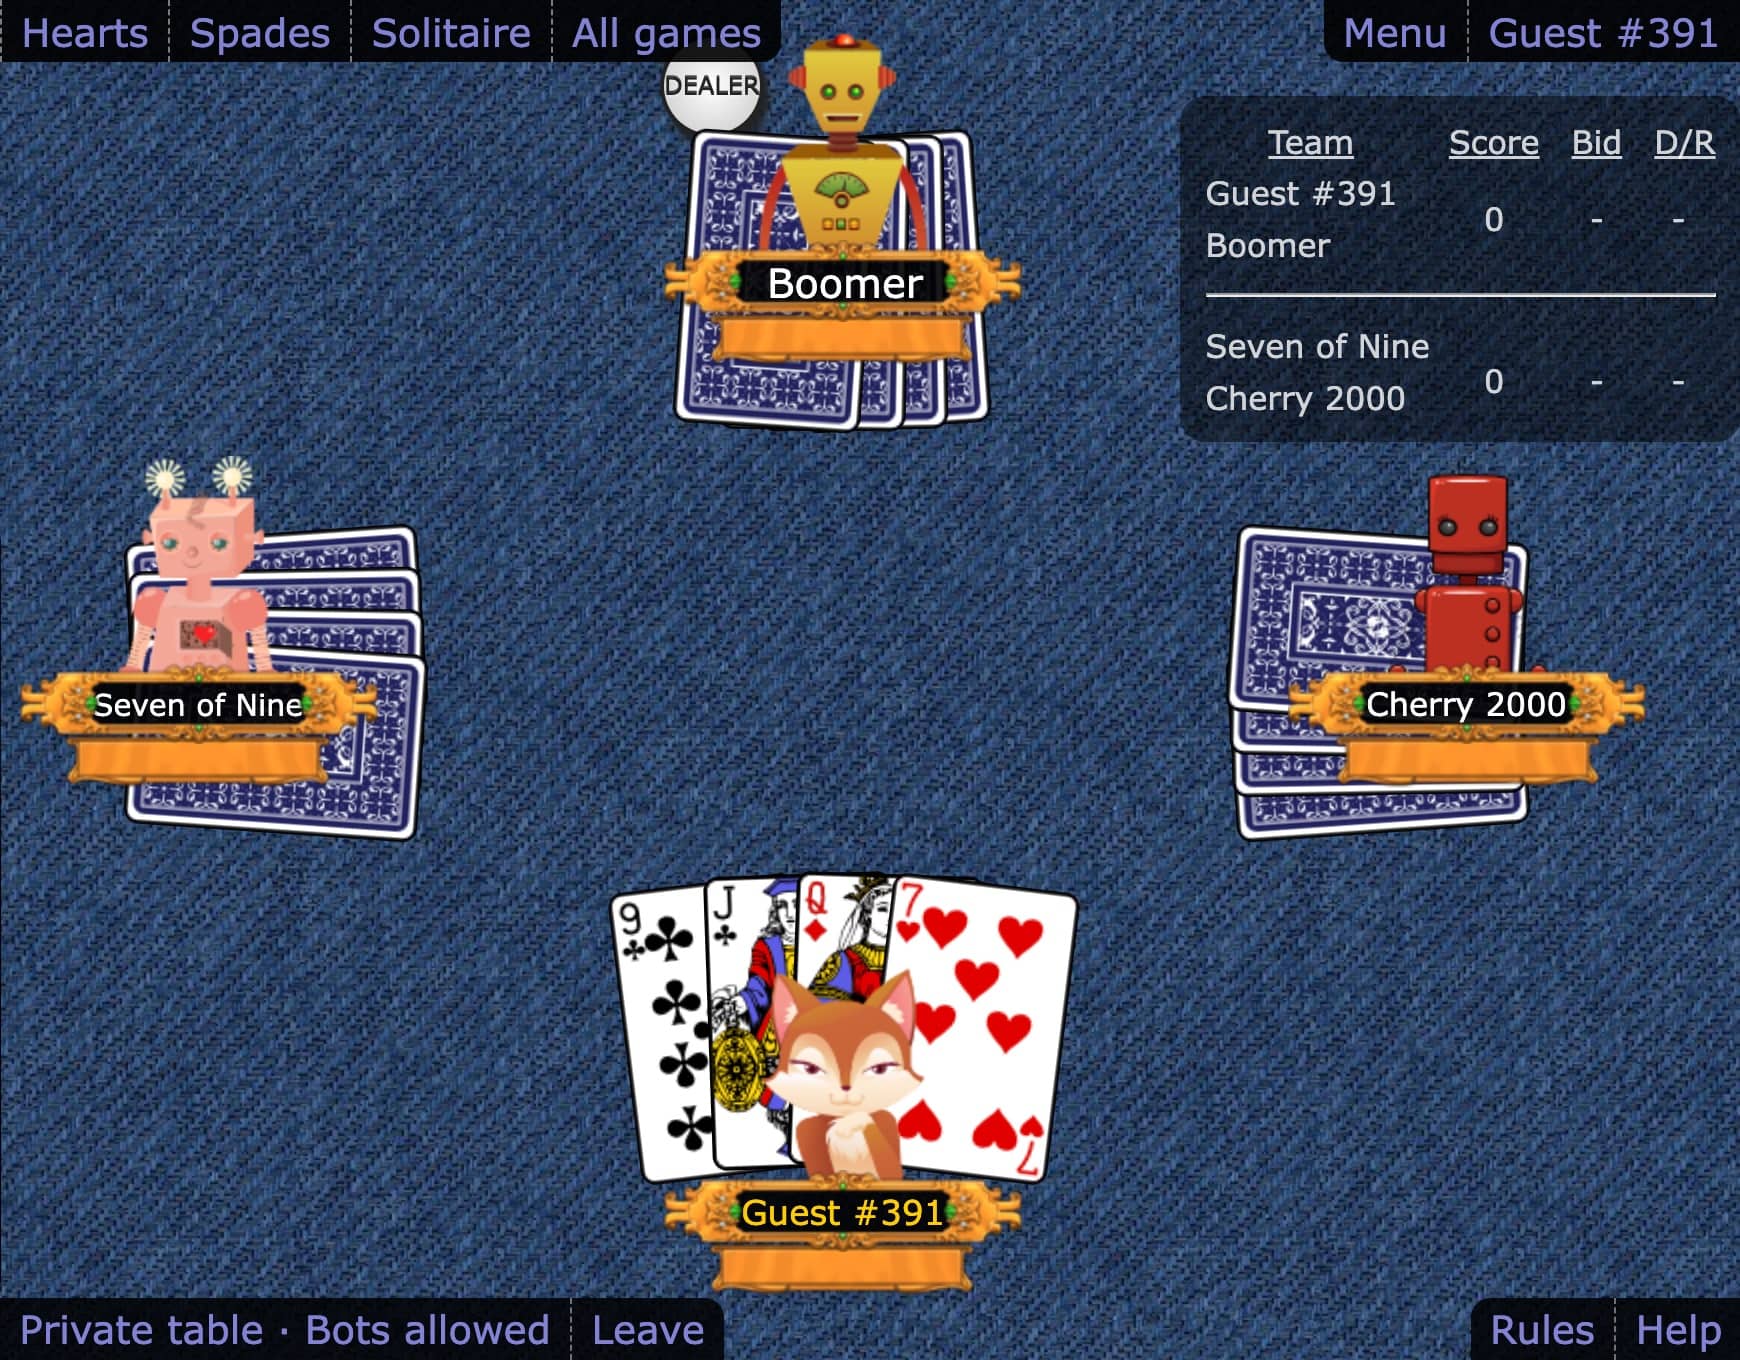 Play Twenty-Nine online - Twenty-Nine card game screenshot